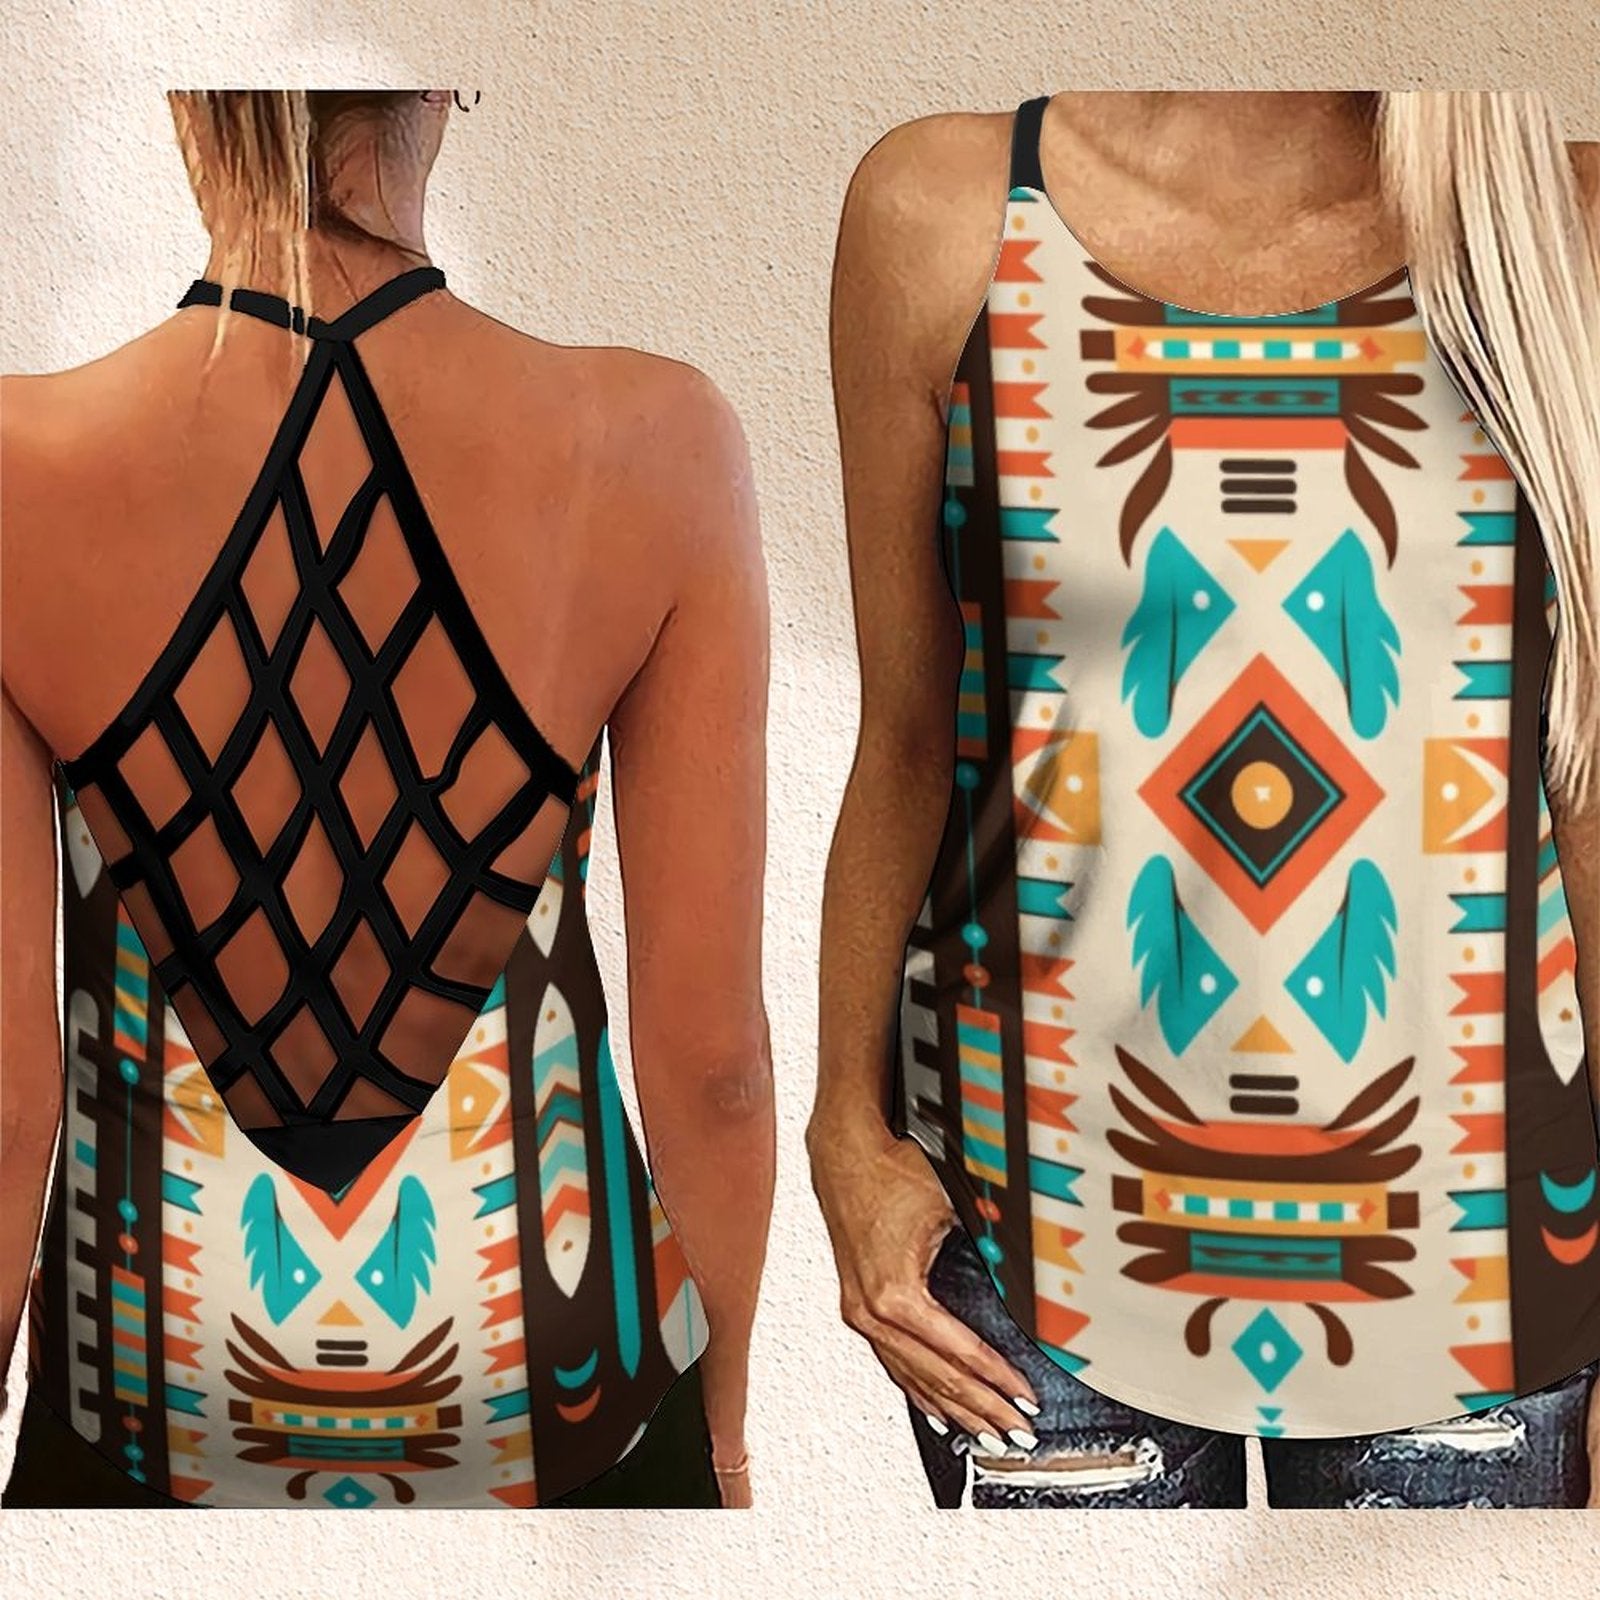 Native Aztec Design Print Summer Outfits  Criss Cross Tank Top